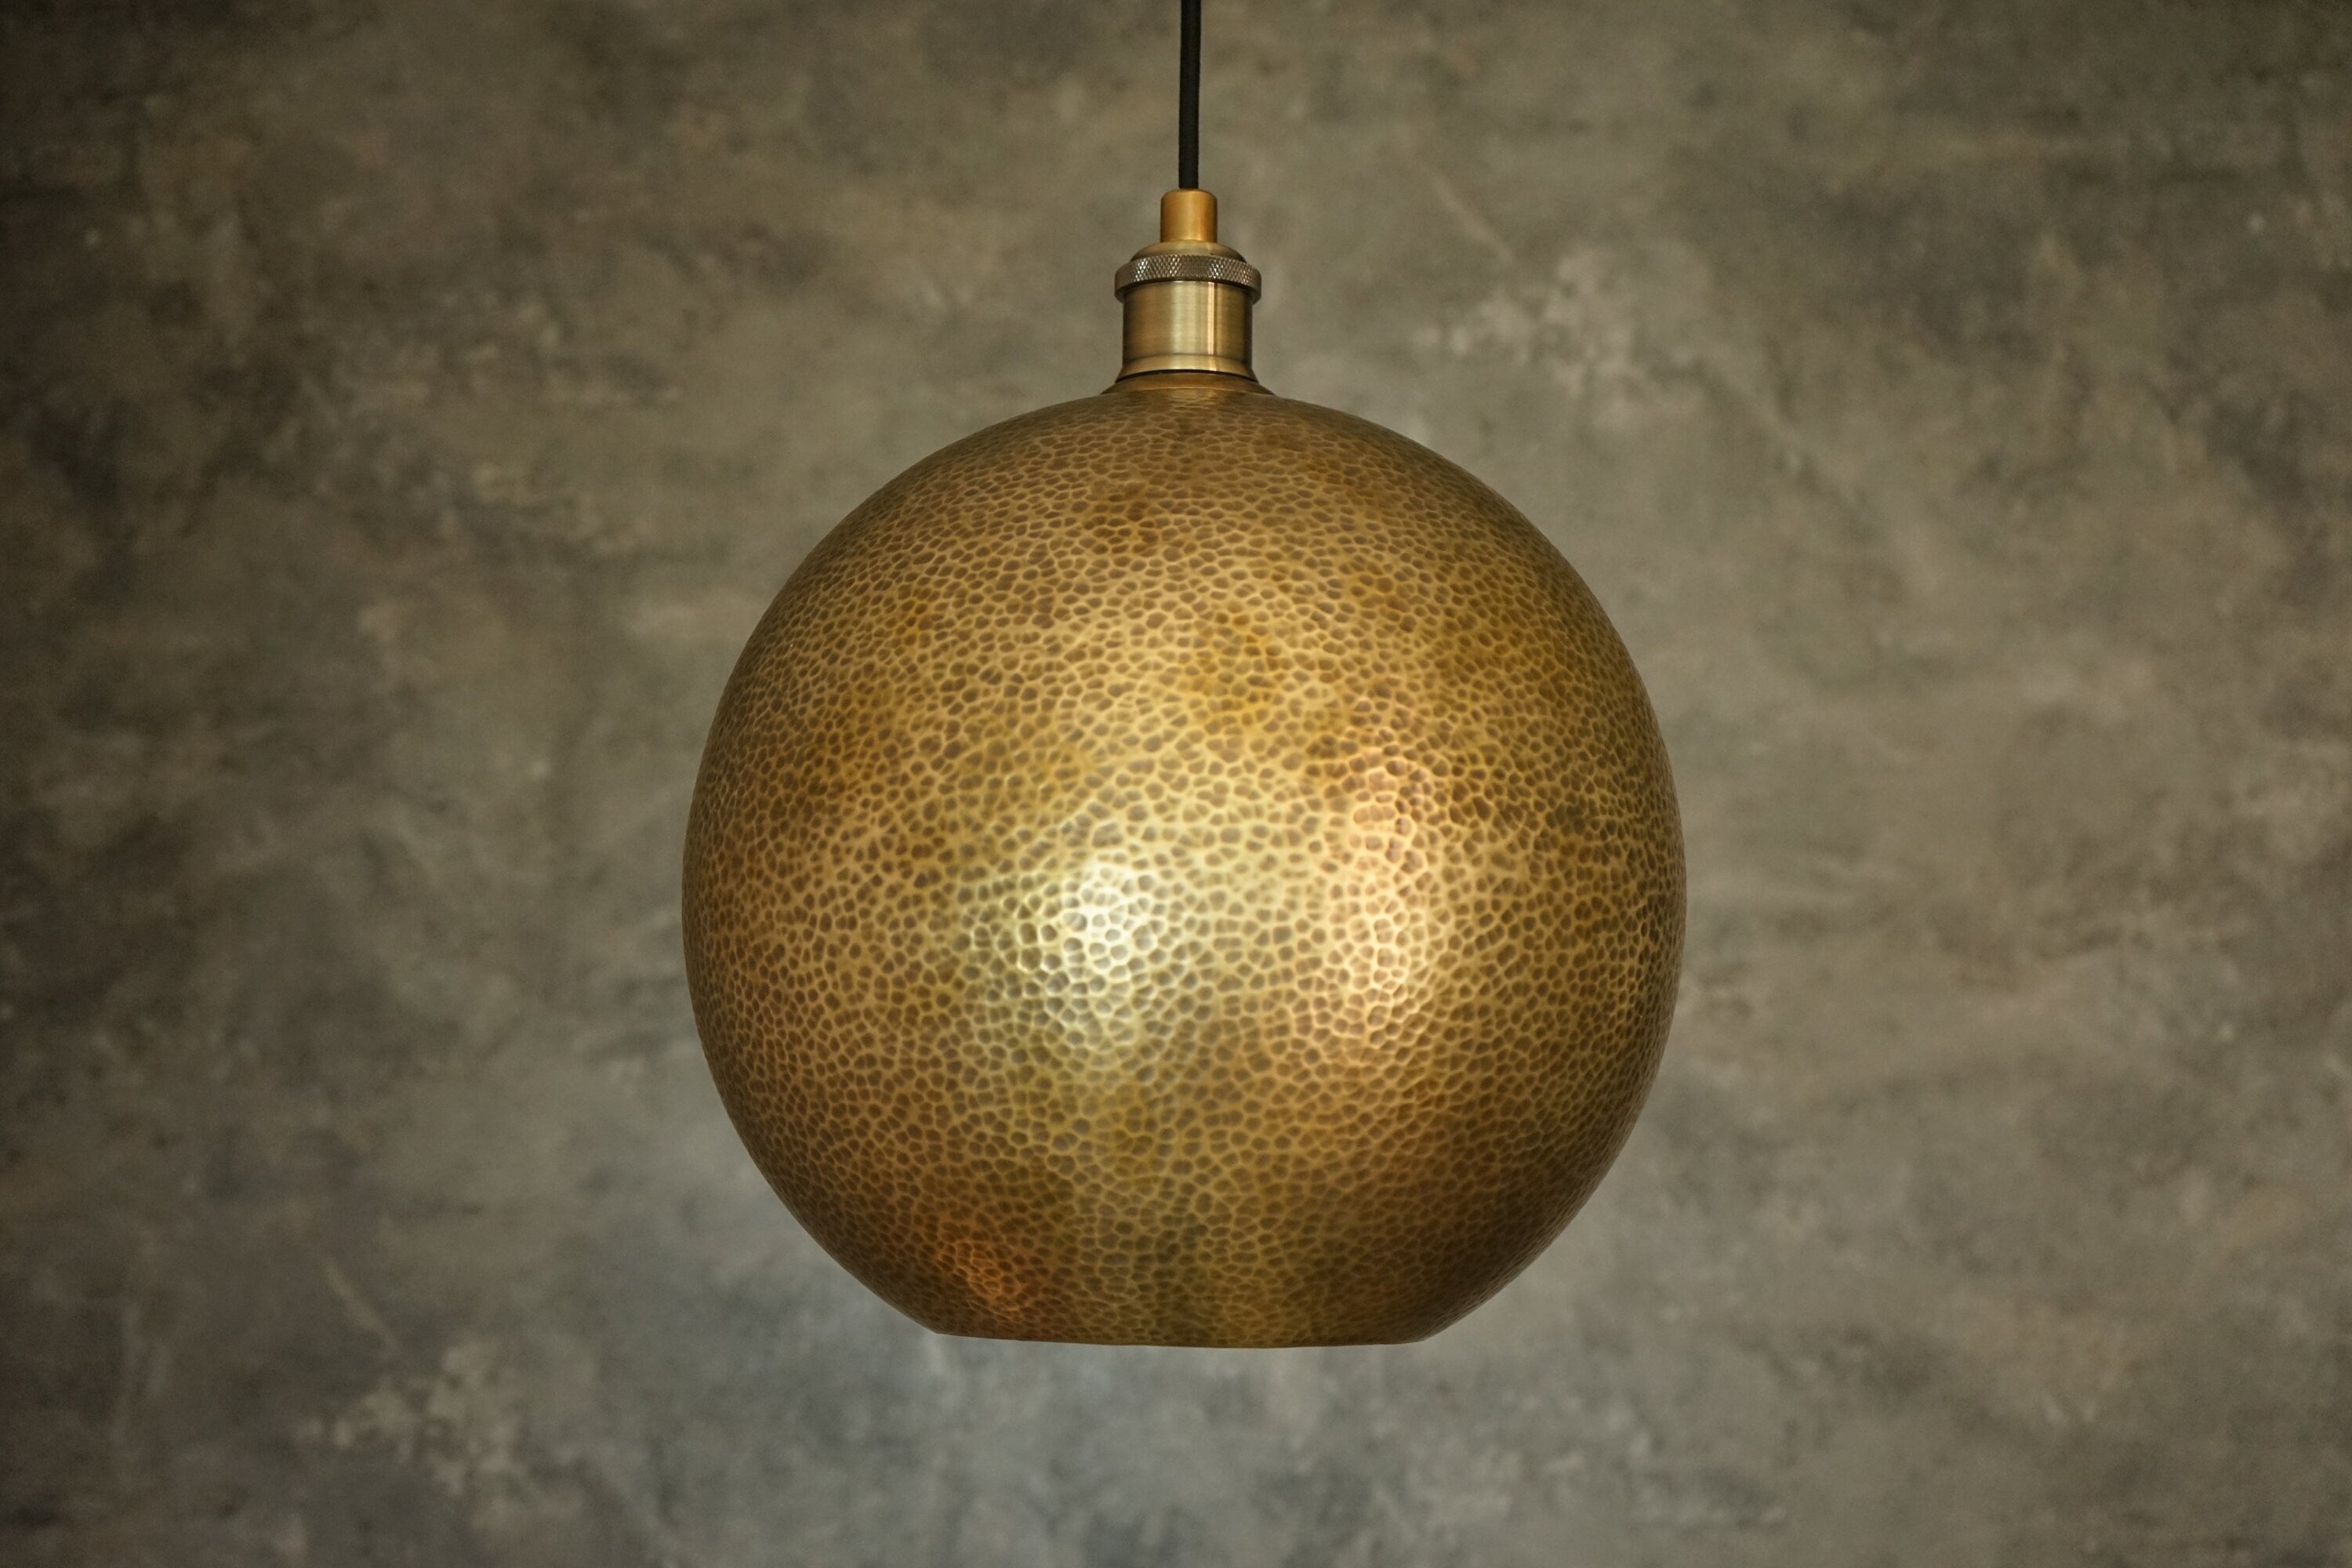 Hammered Brass Ball Pendant Light, Dome Ceiling Light